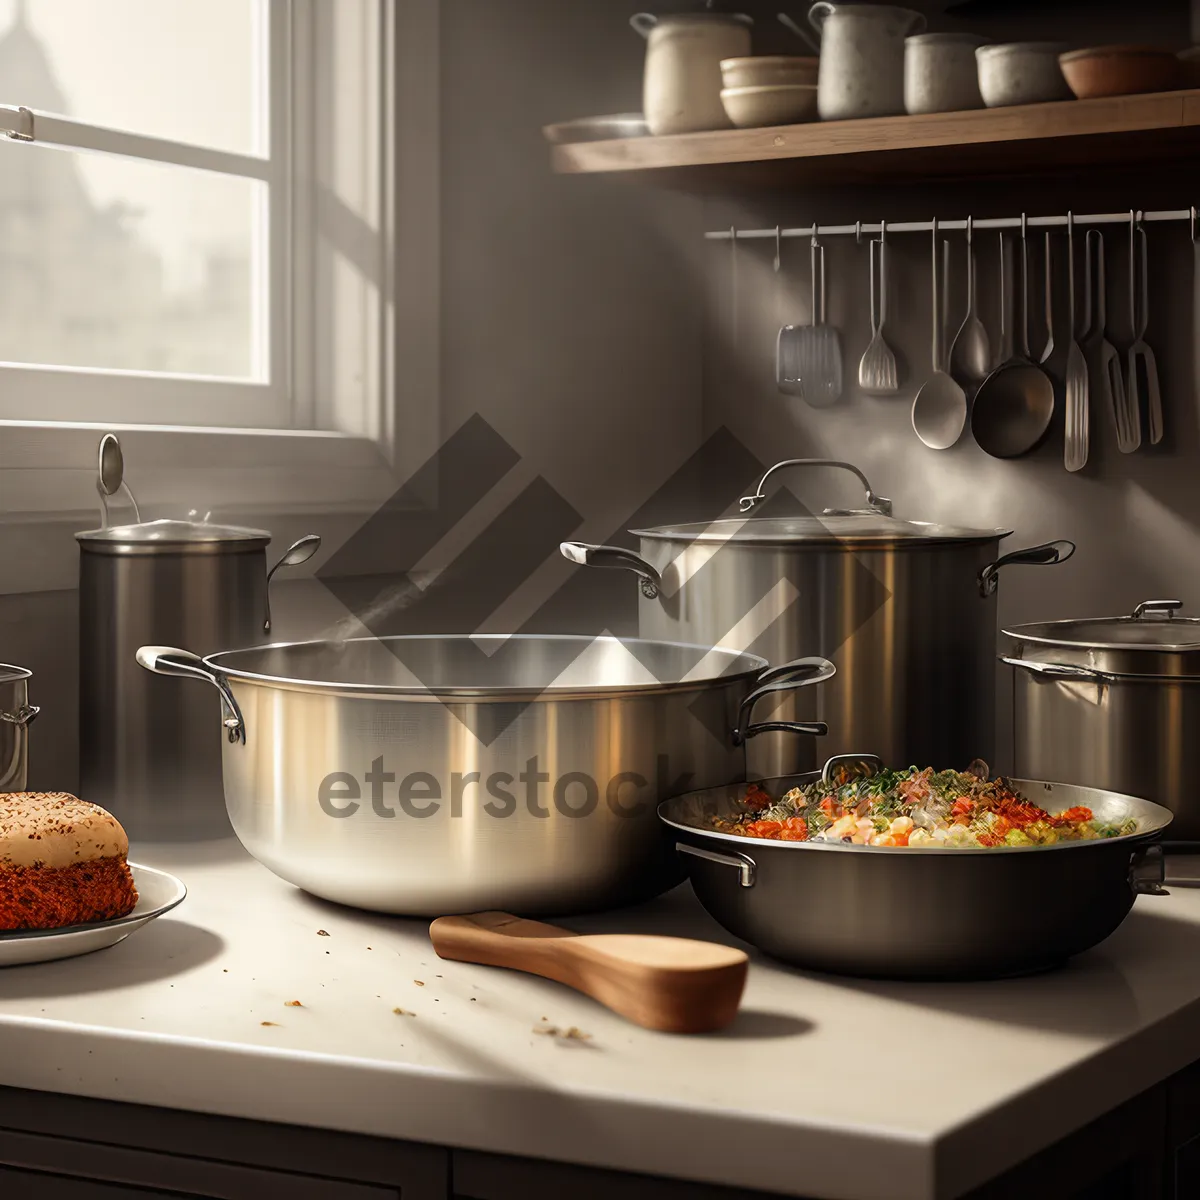 Picture of Modern Luxury Kitchen Interior with Stylish Kitchenware